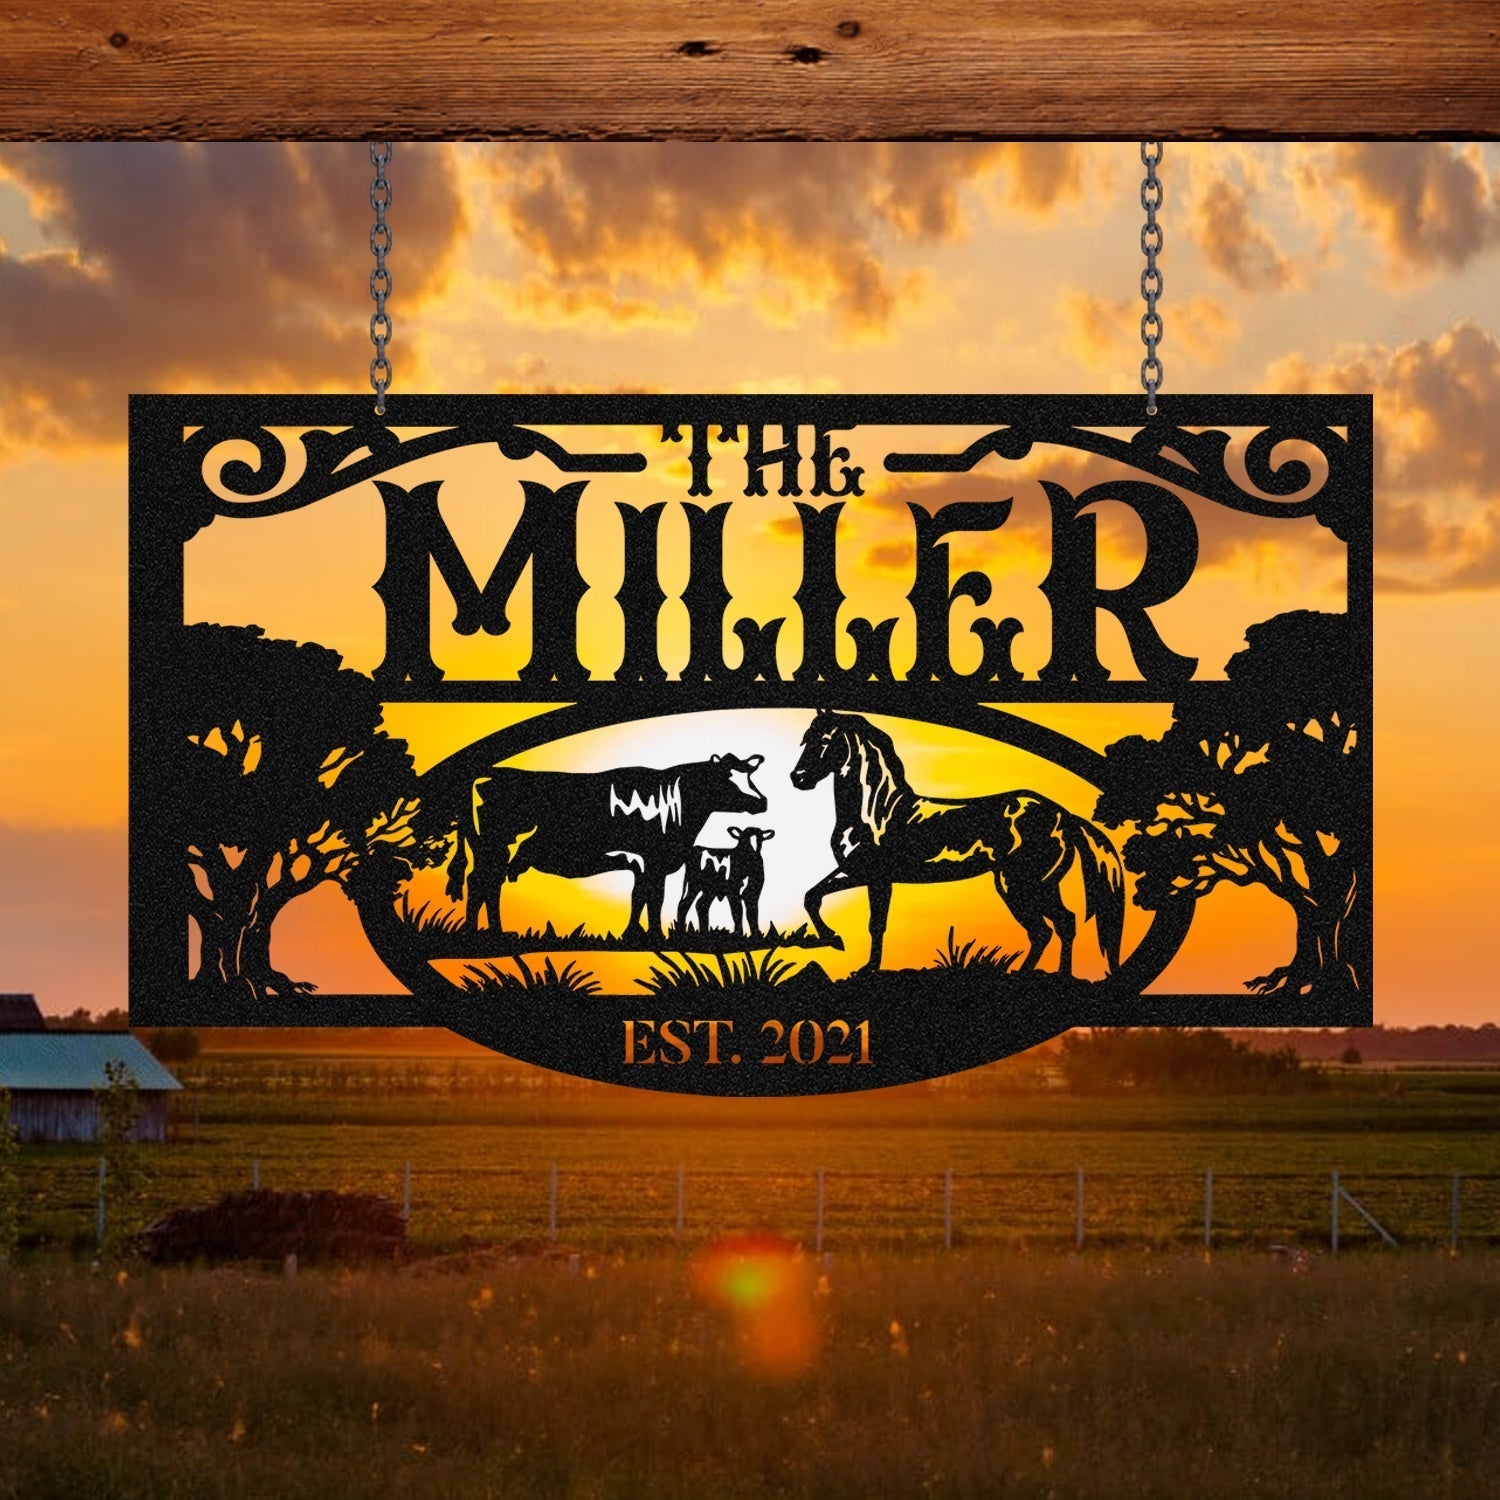 Personalized Metal Farm Sign Horse Cow Monogram Custom Outdoor Farmhouse Ranch Stable Barn Wall Decor Art Gift